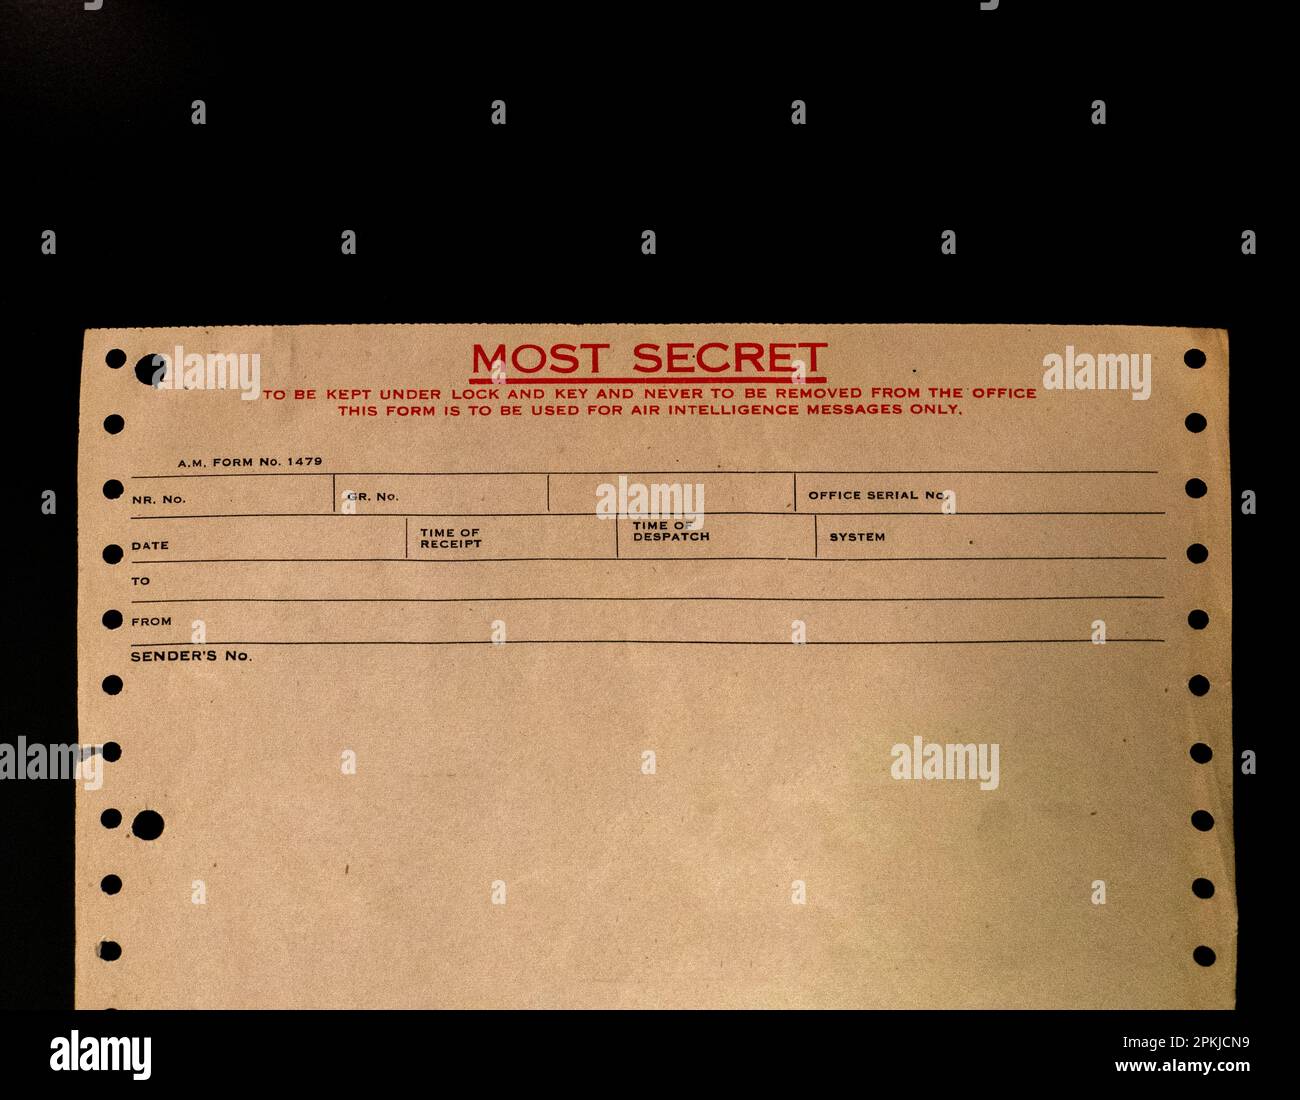 An old paper receipt (most secret) on a black desk surface Stock Photo